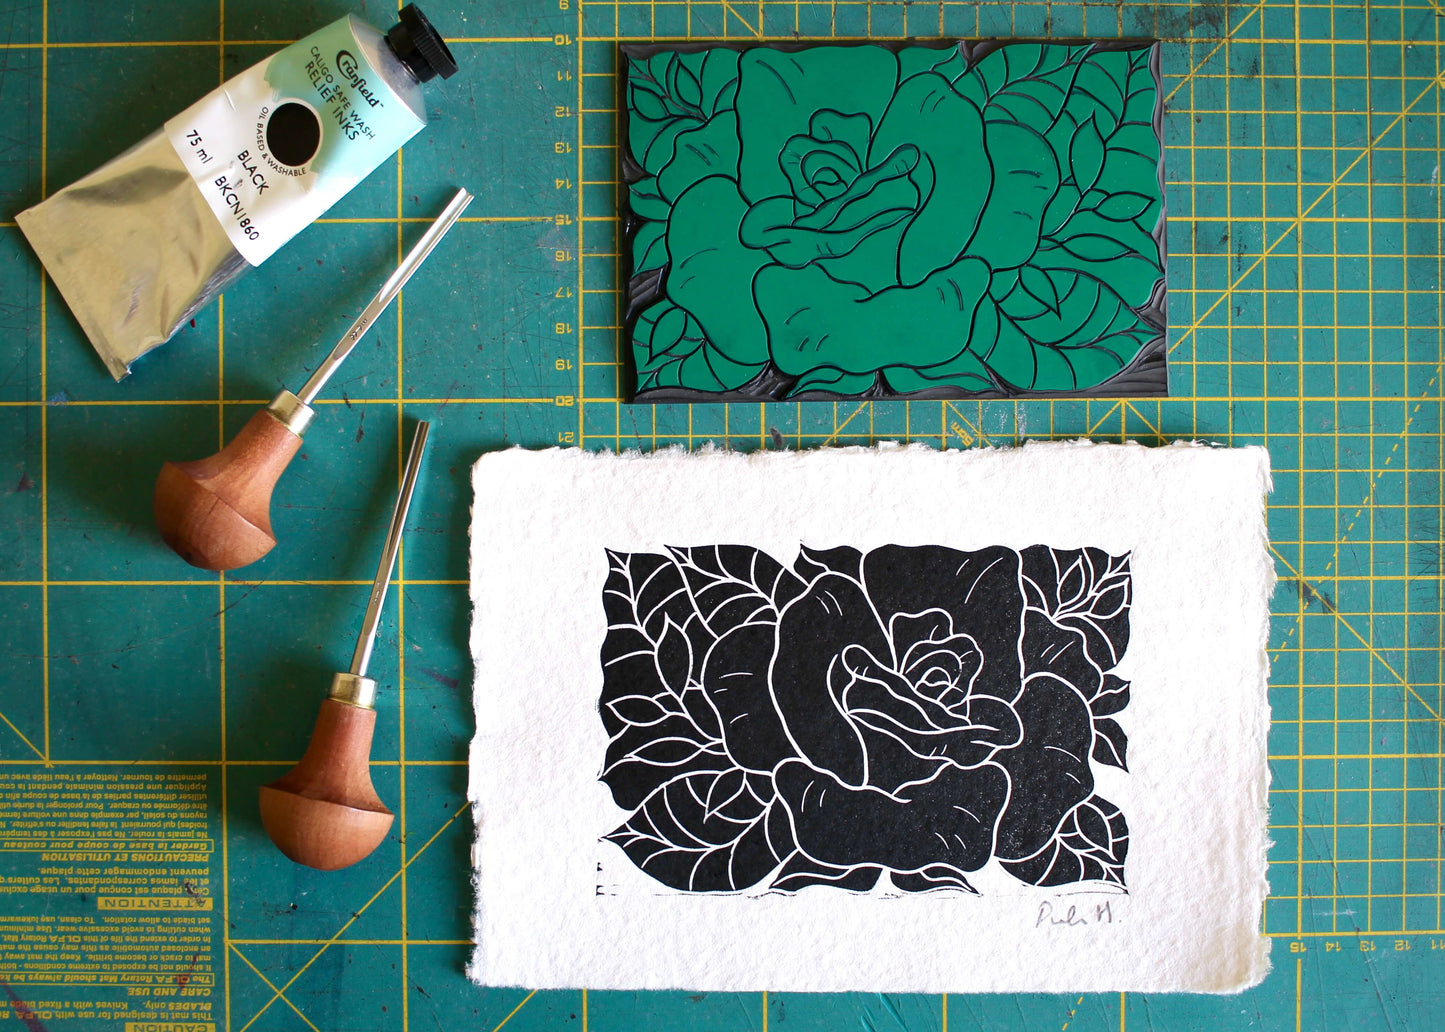 Hand Printed Rose Linocut on Cotton Rag Paper